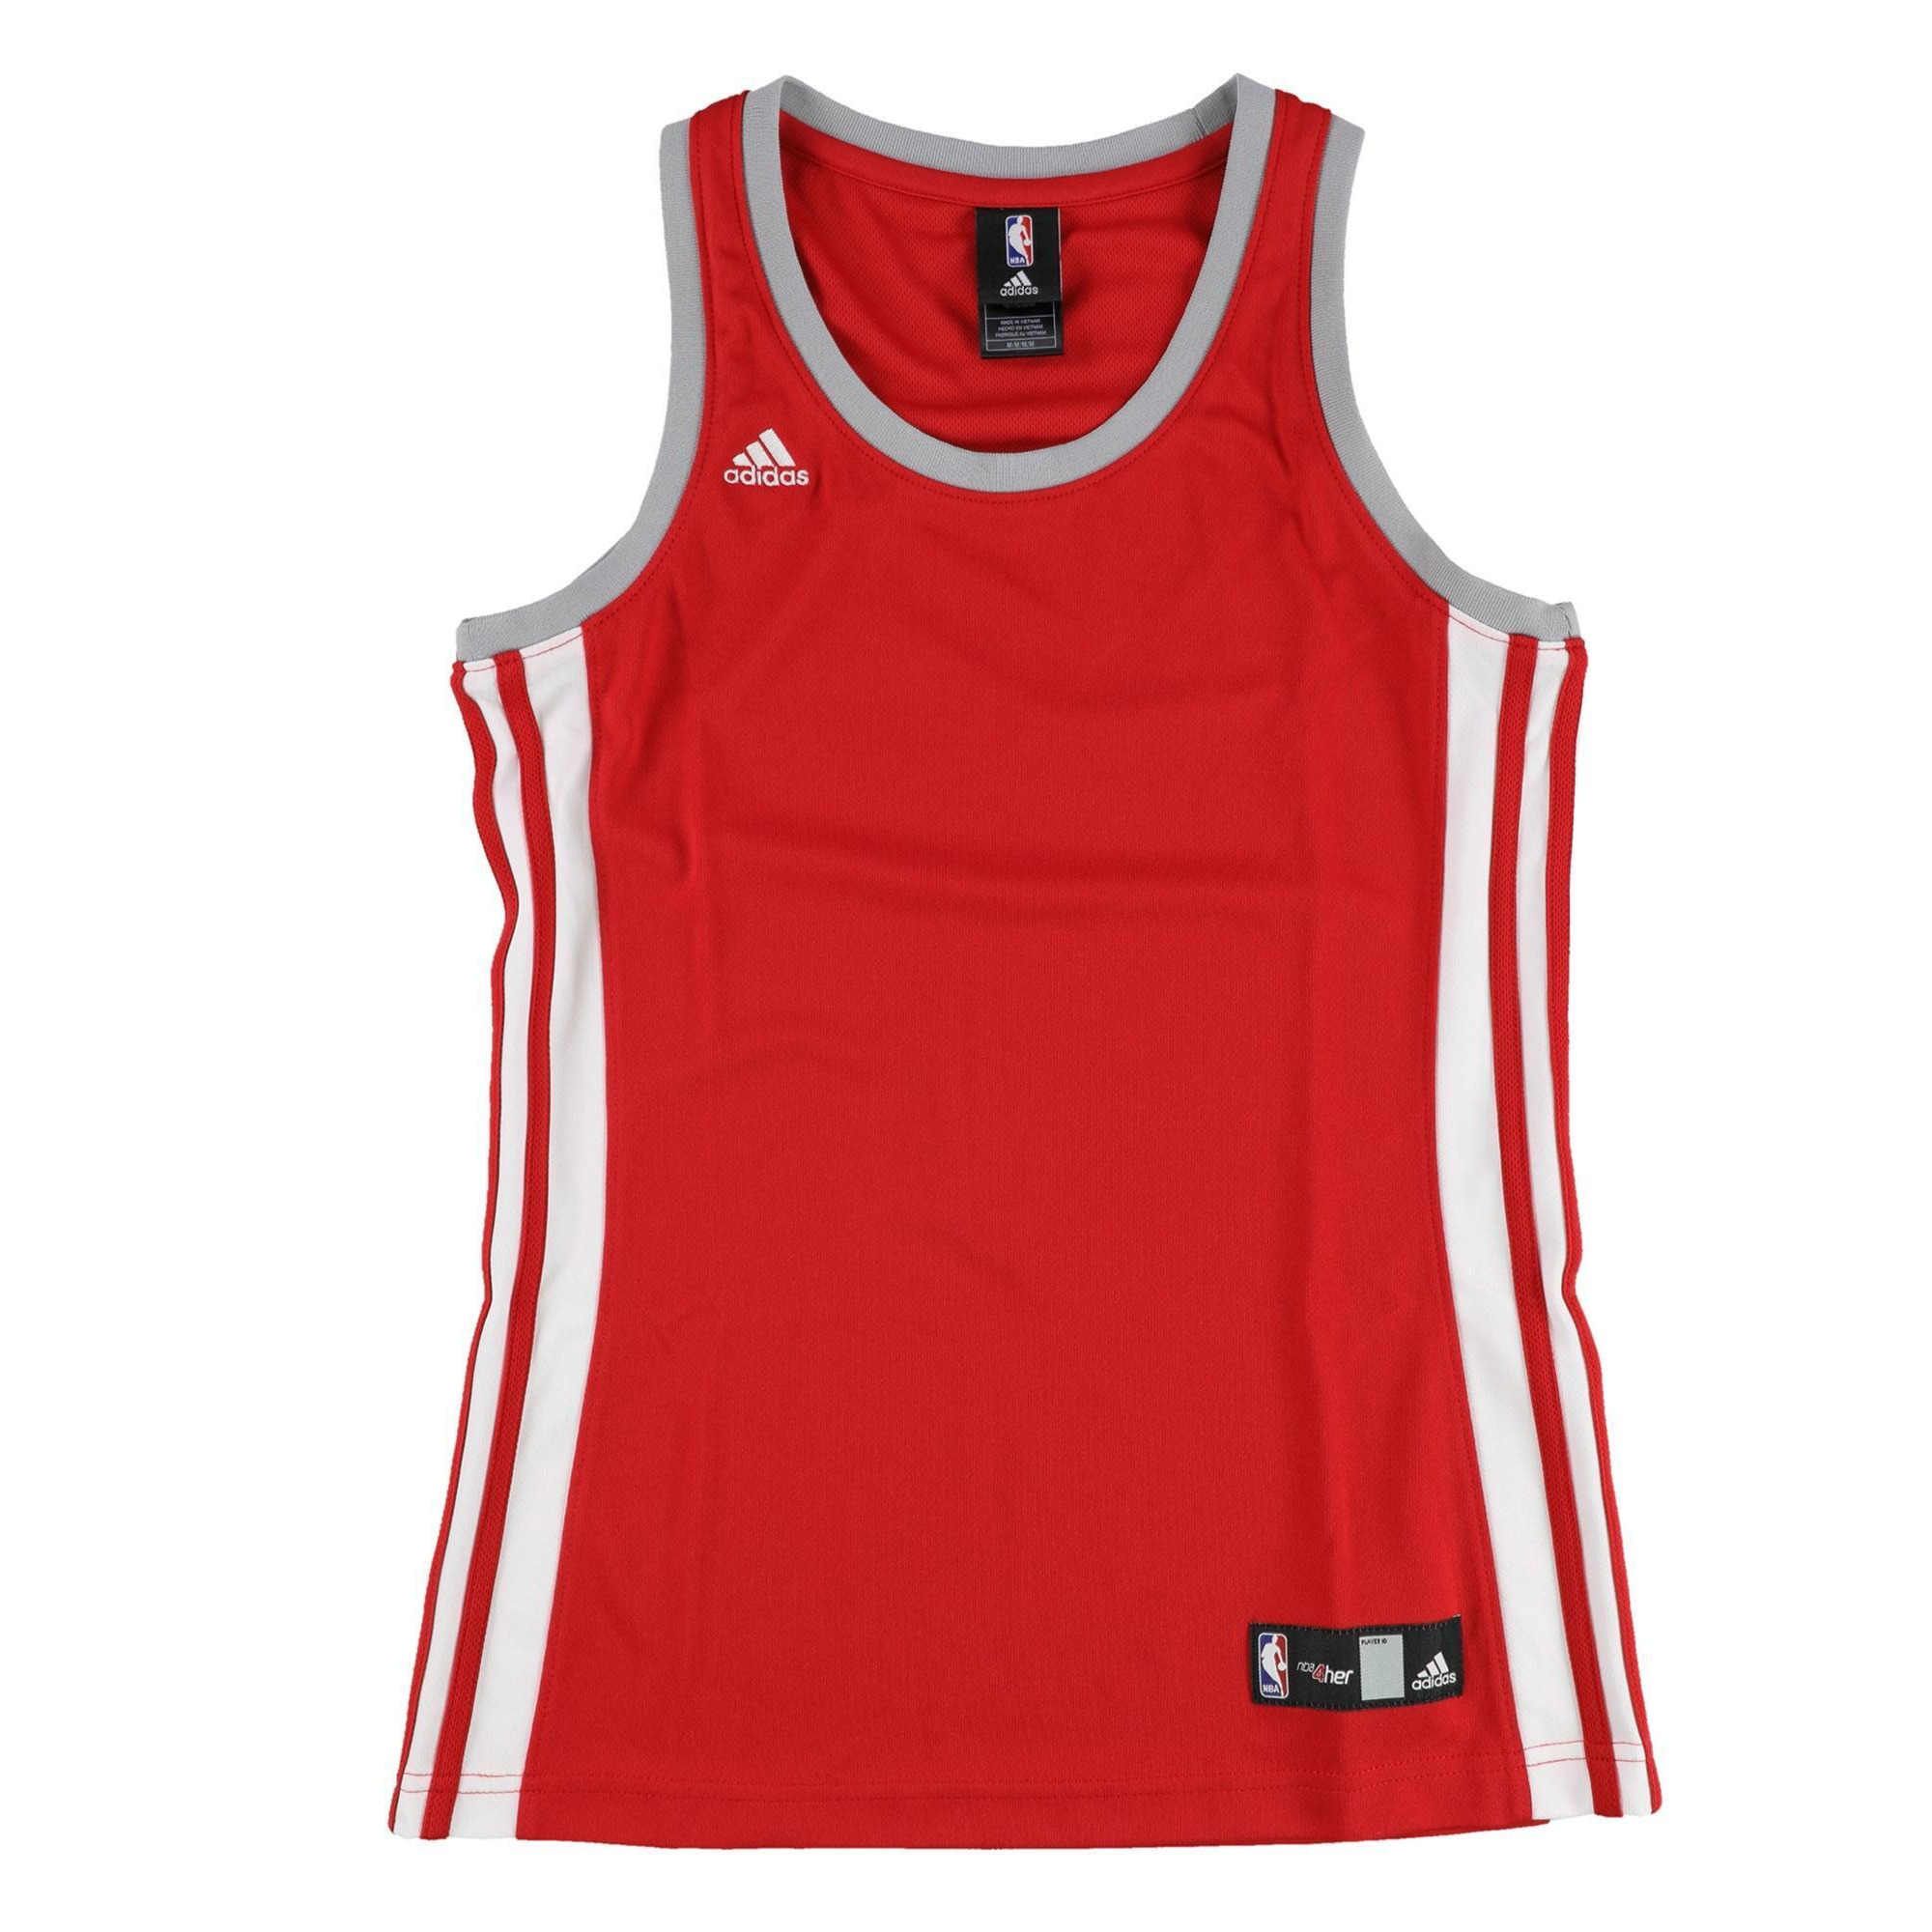 red blank basketball jersey